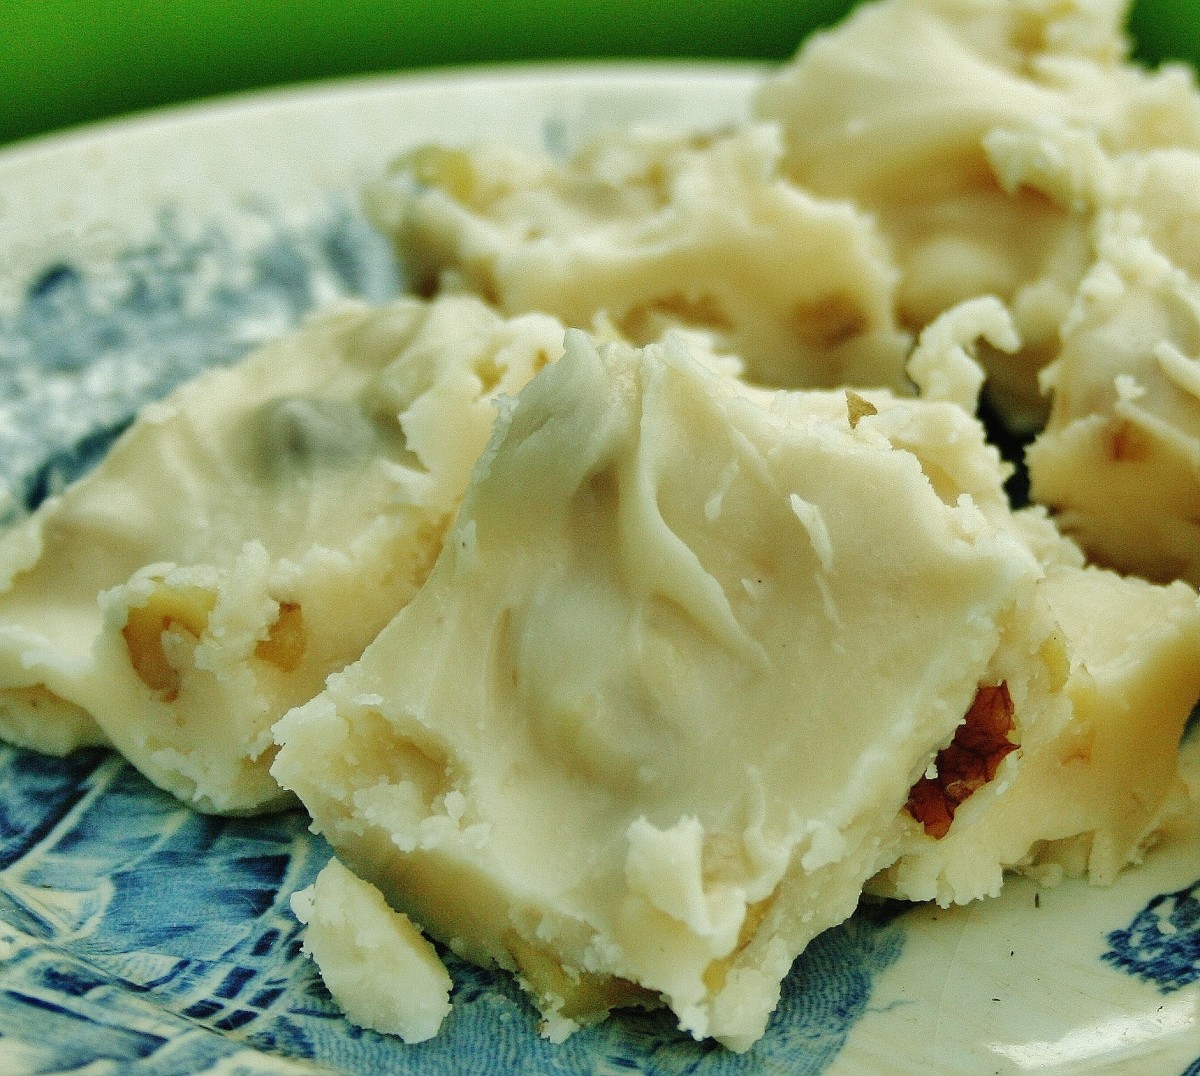 This sour cream fudge is made from milk, butter, sugar, sour cream, vanilla & walnuts.